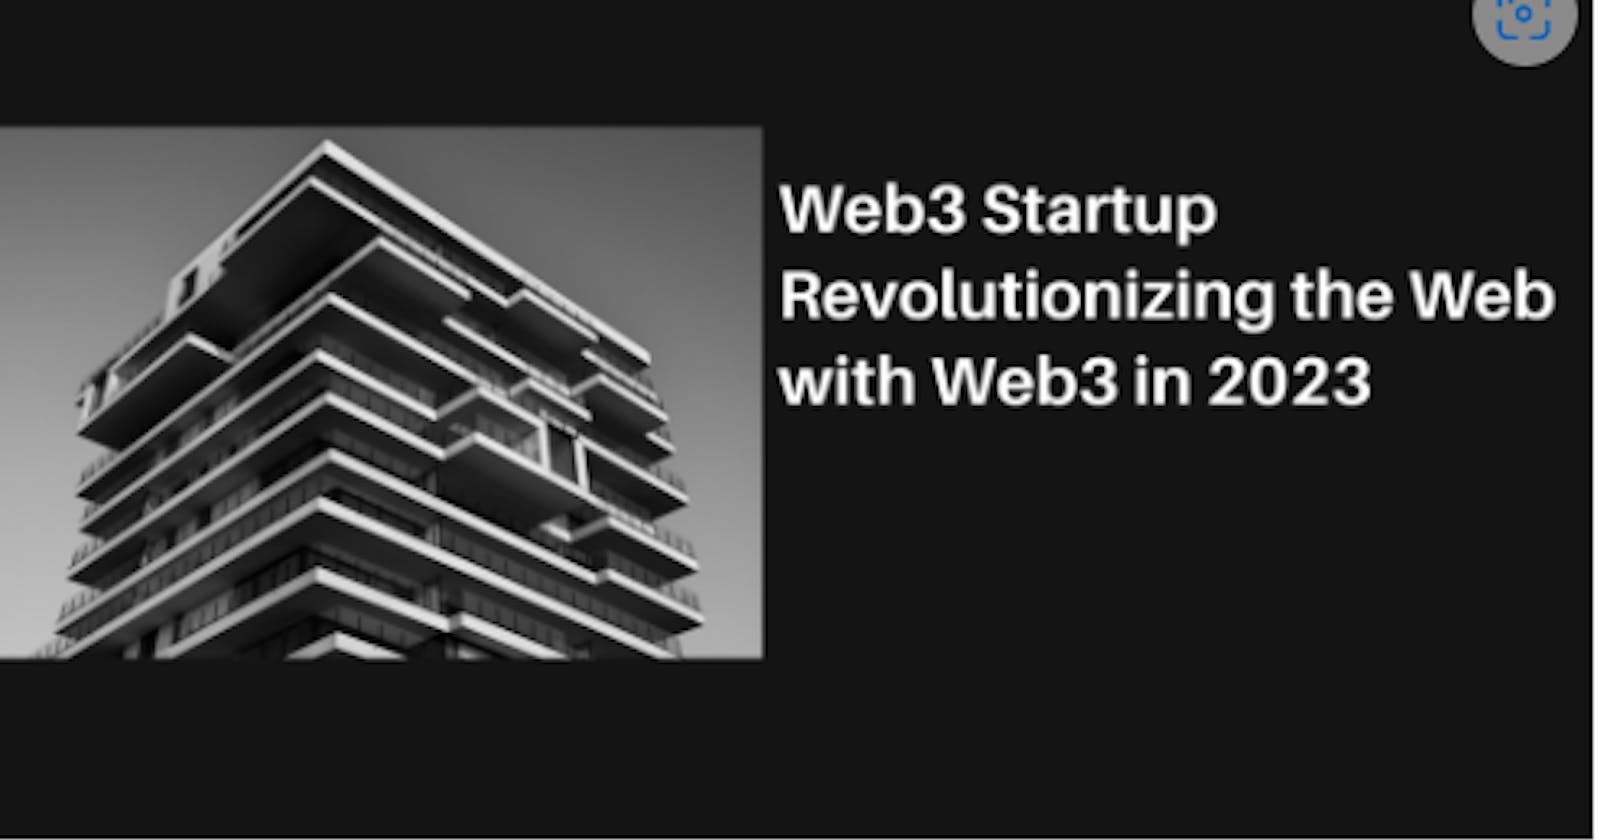 Web3 Startups Revolutionizing the Web in 2023